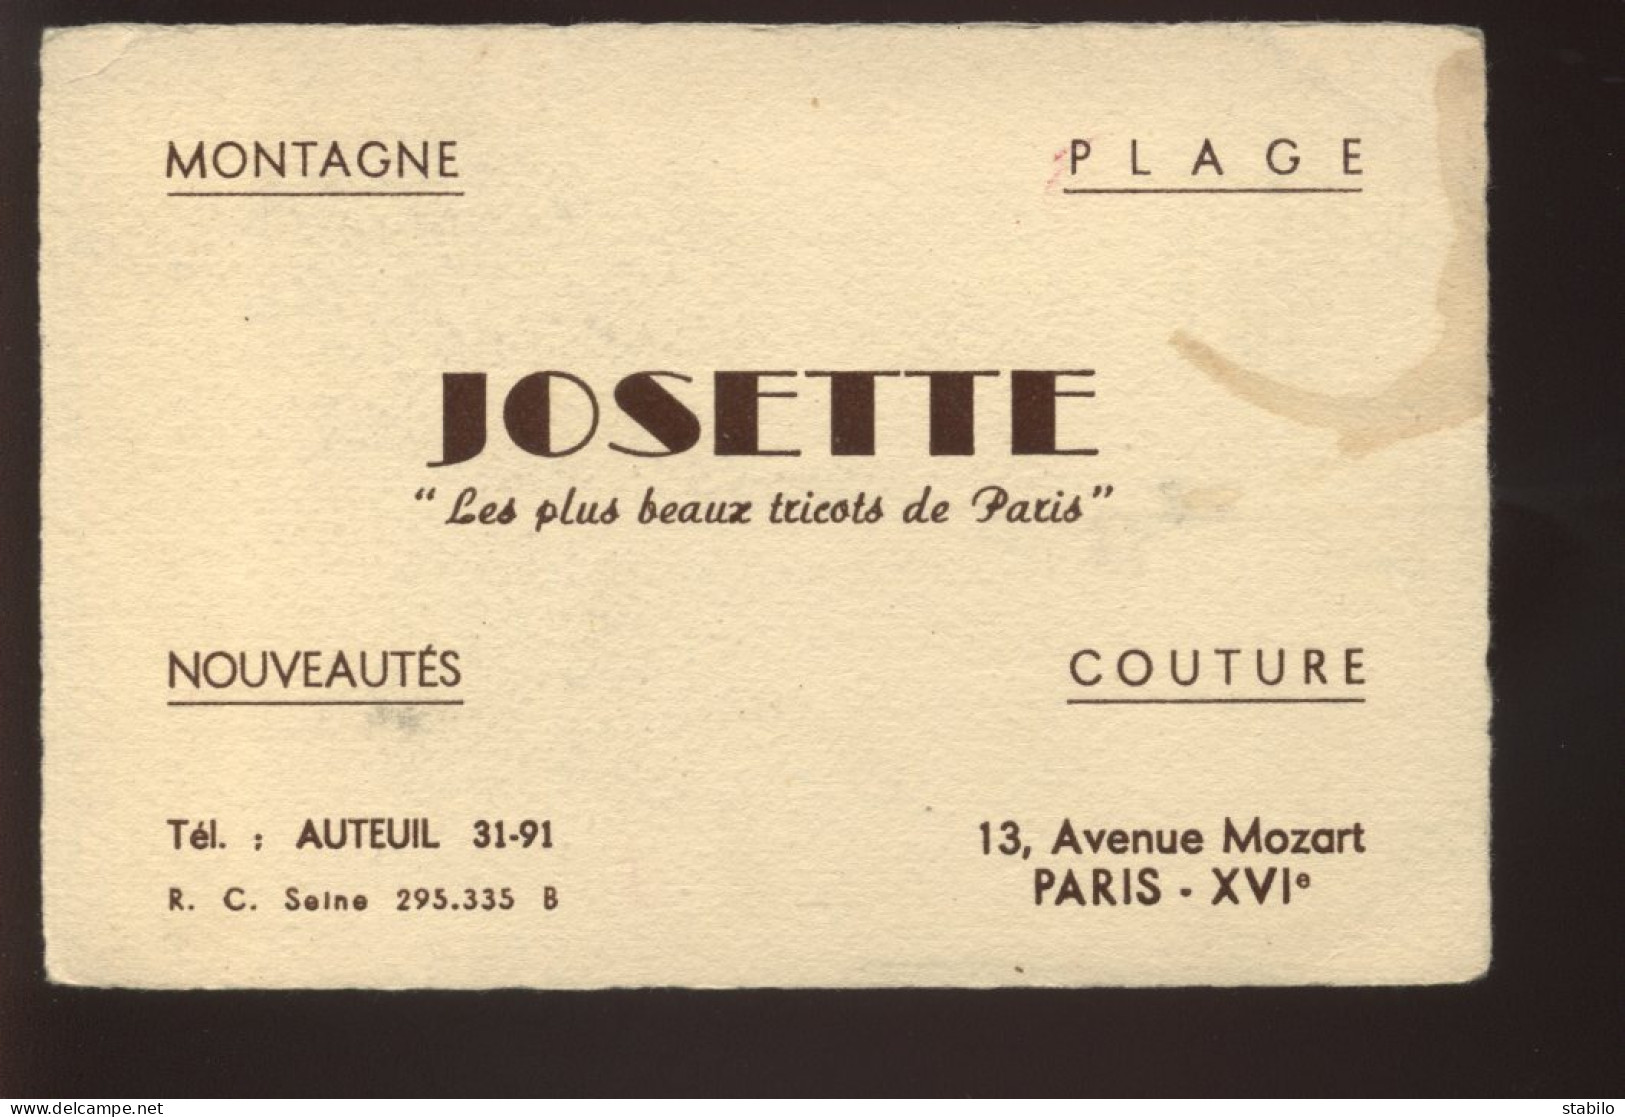 CARTES DE VISITE - PARIS 16EME - "JOSETTE" TRICOTS, 13 AVENUE MOZART - Cartoncini Da Visita